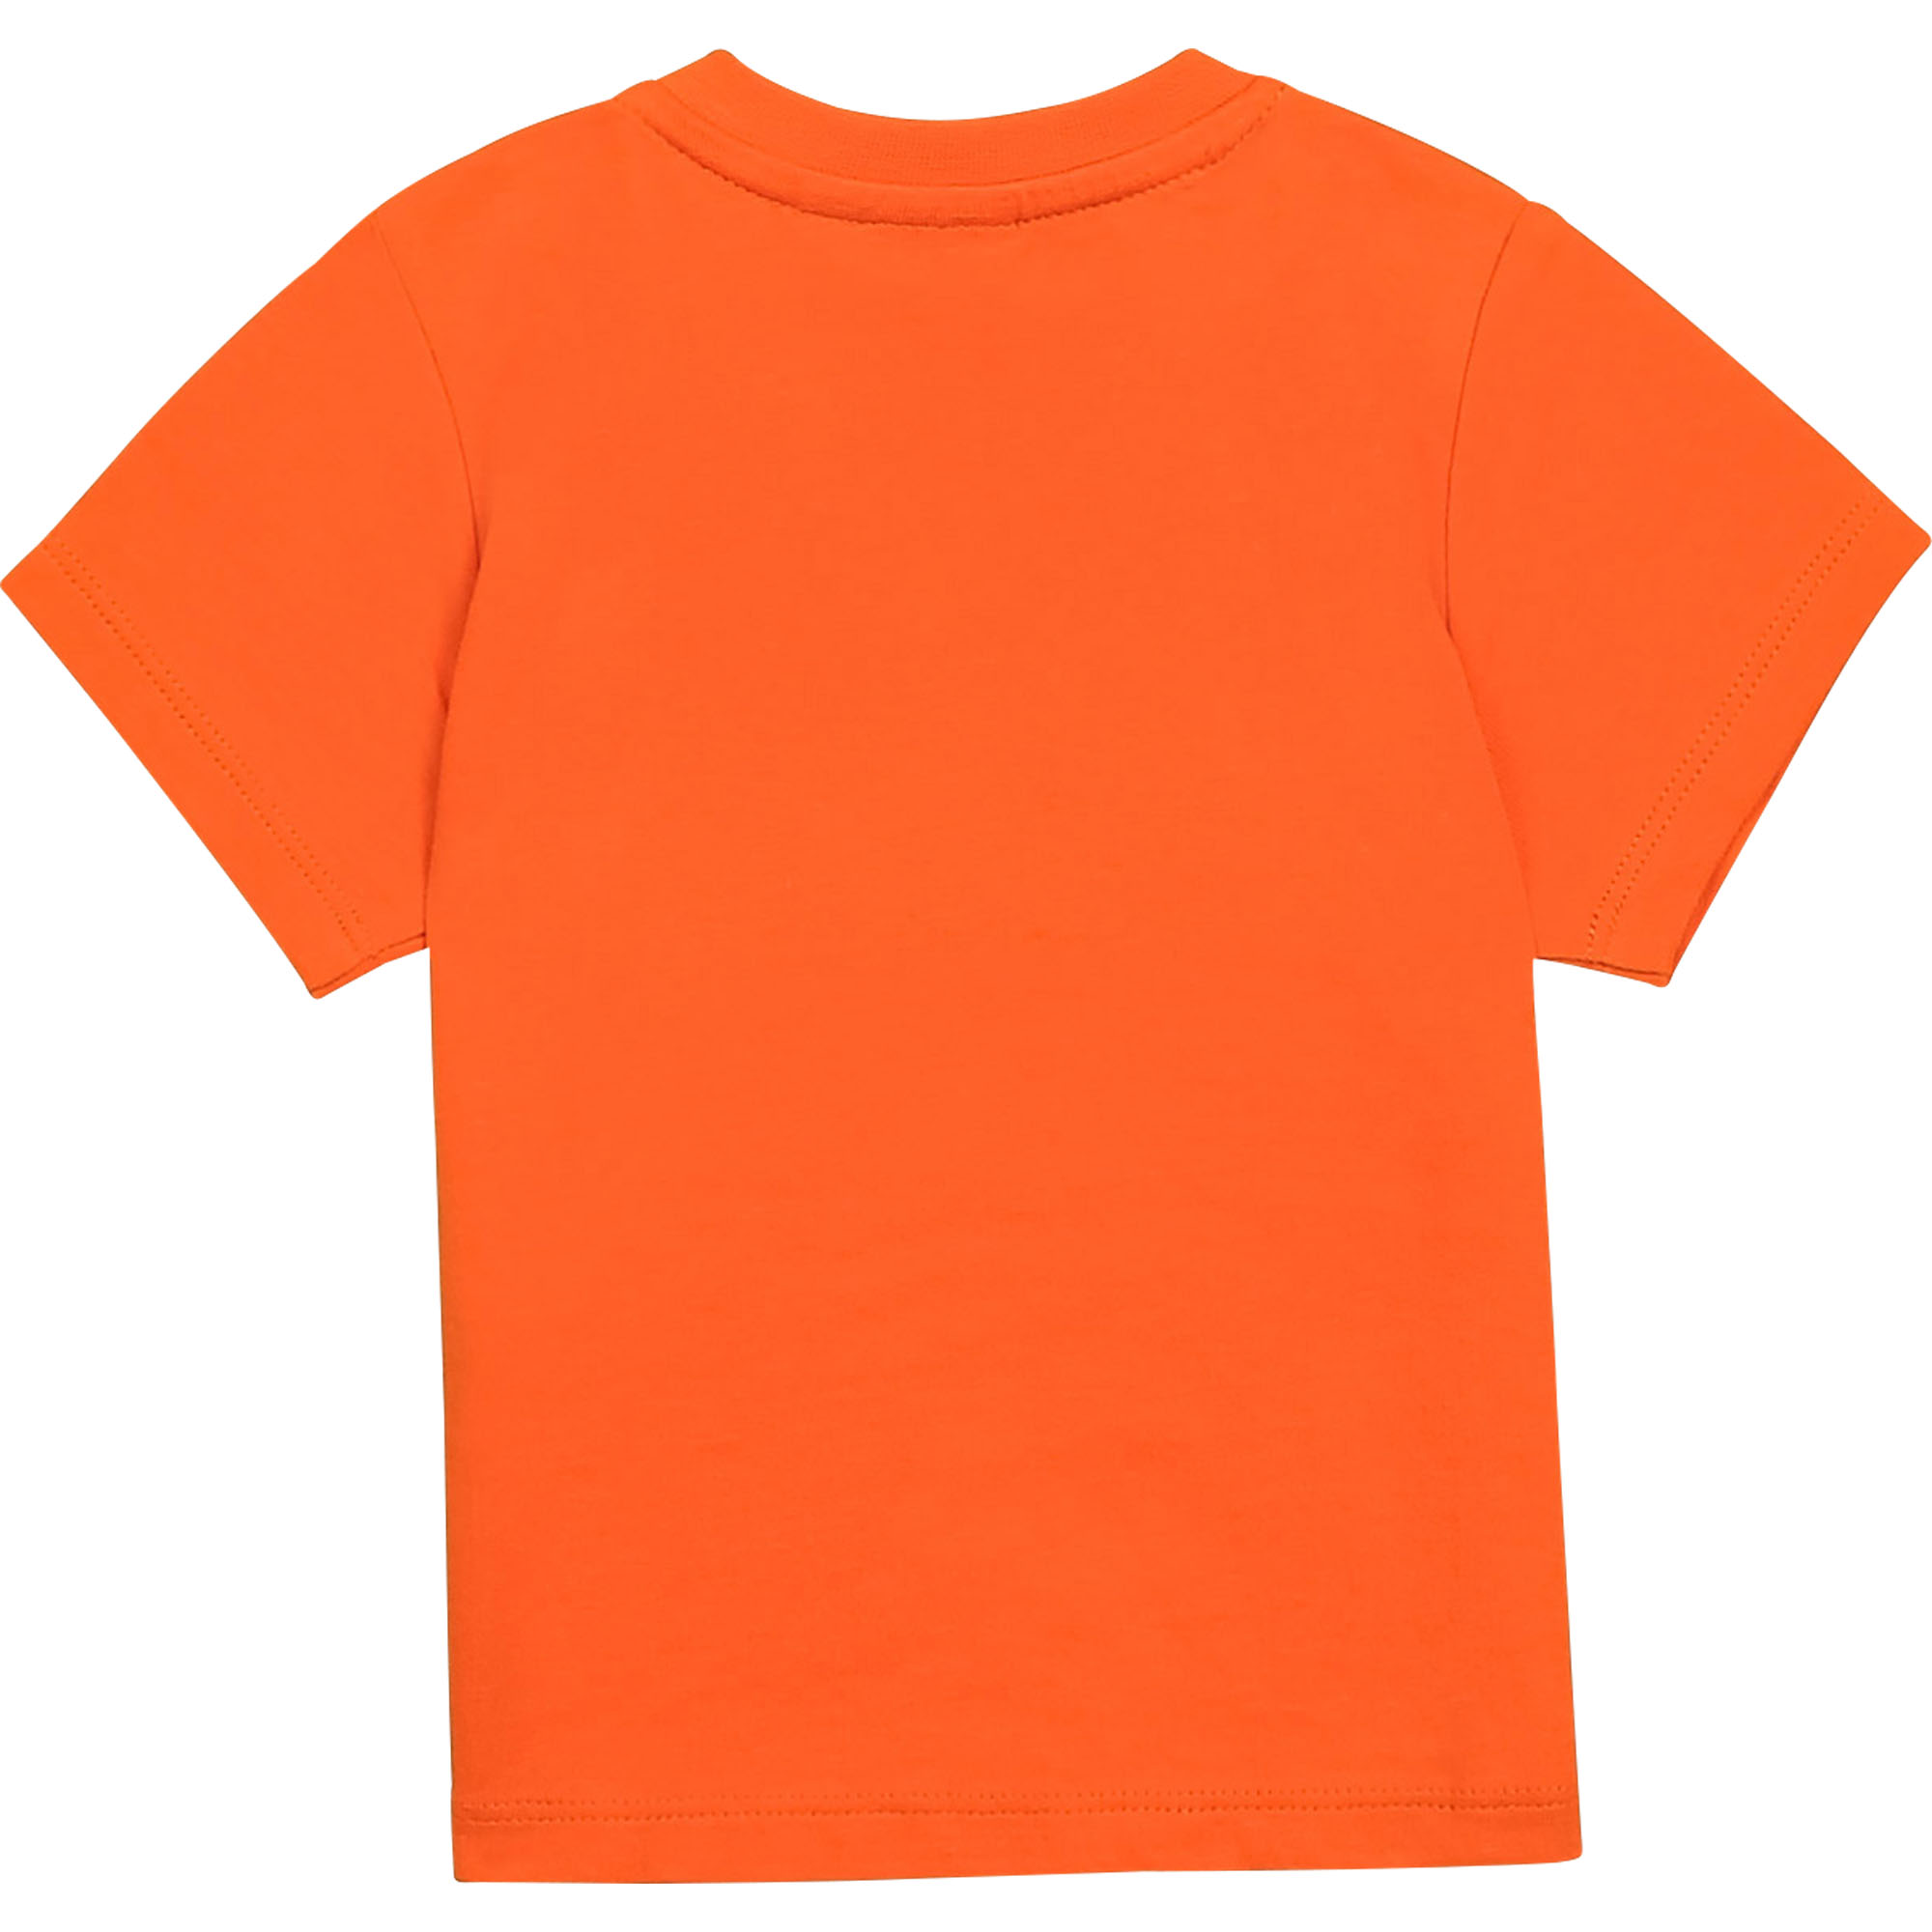 Camiseta de punto de algodón BOSS para NIÑO